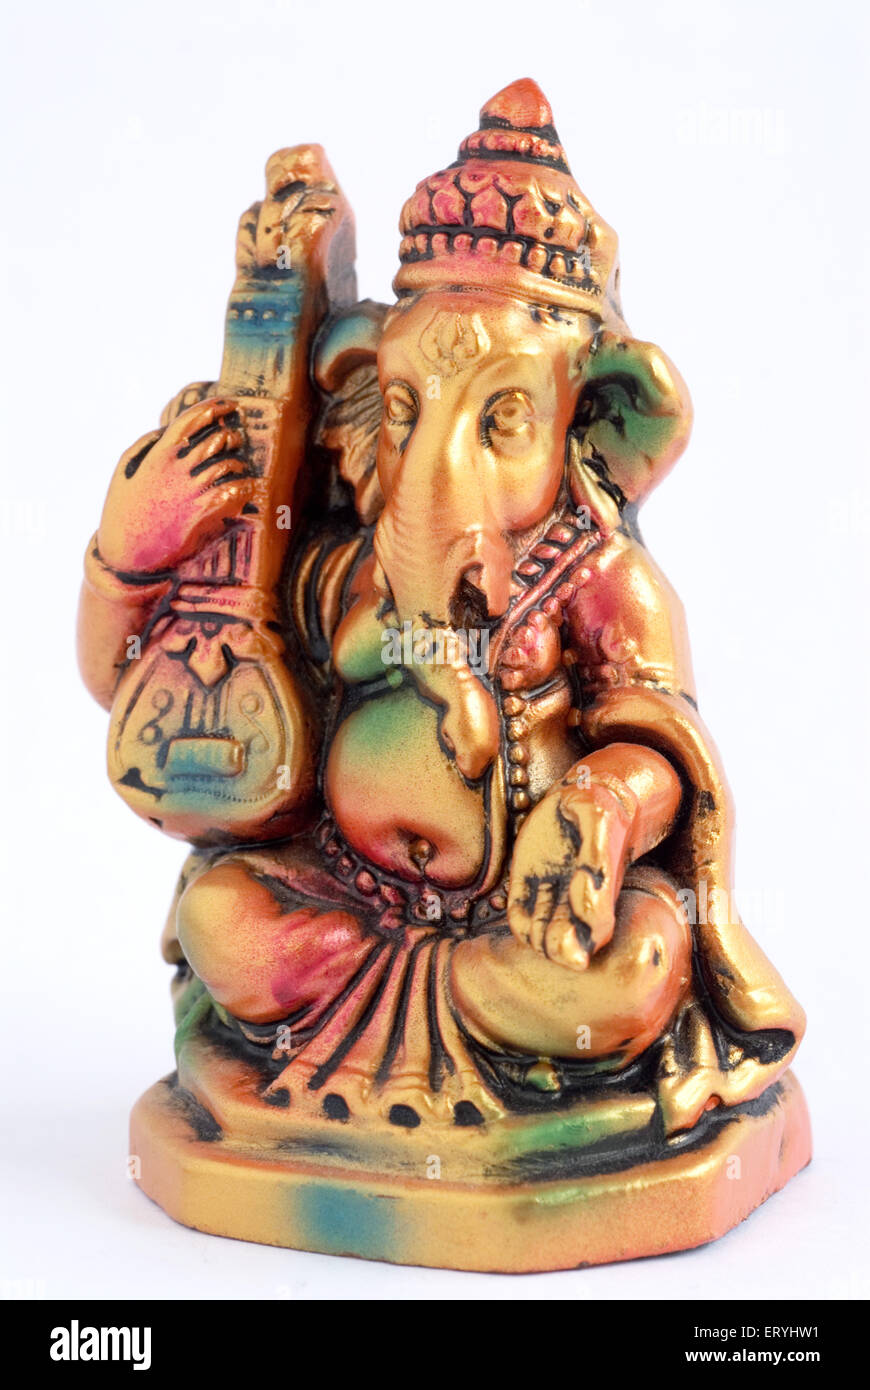 Colourful statue of lord Ganesha elephant headed god playing tambora ...